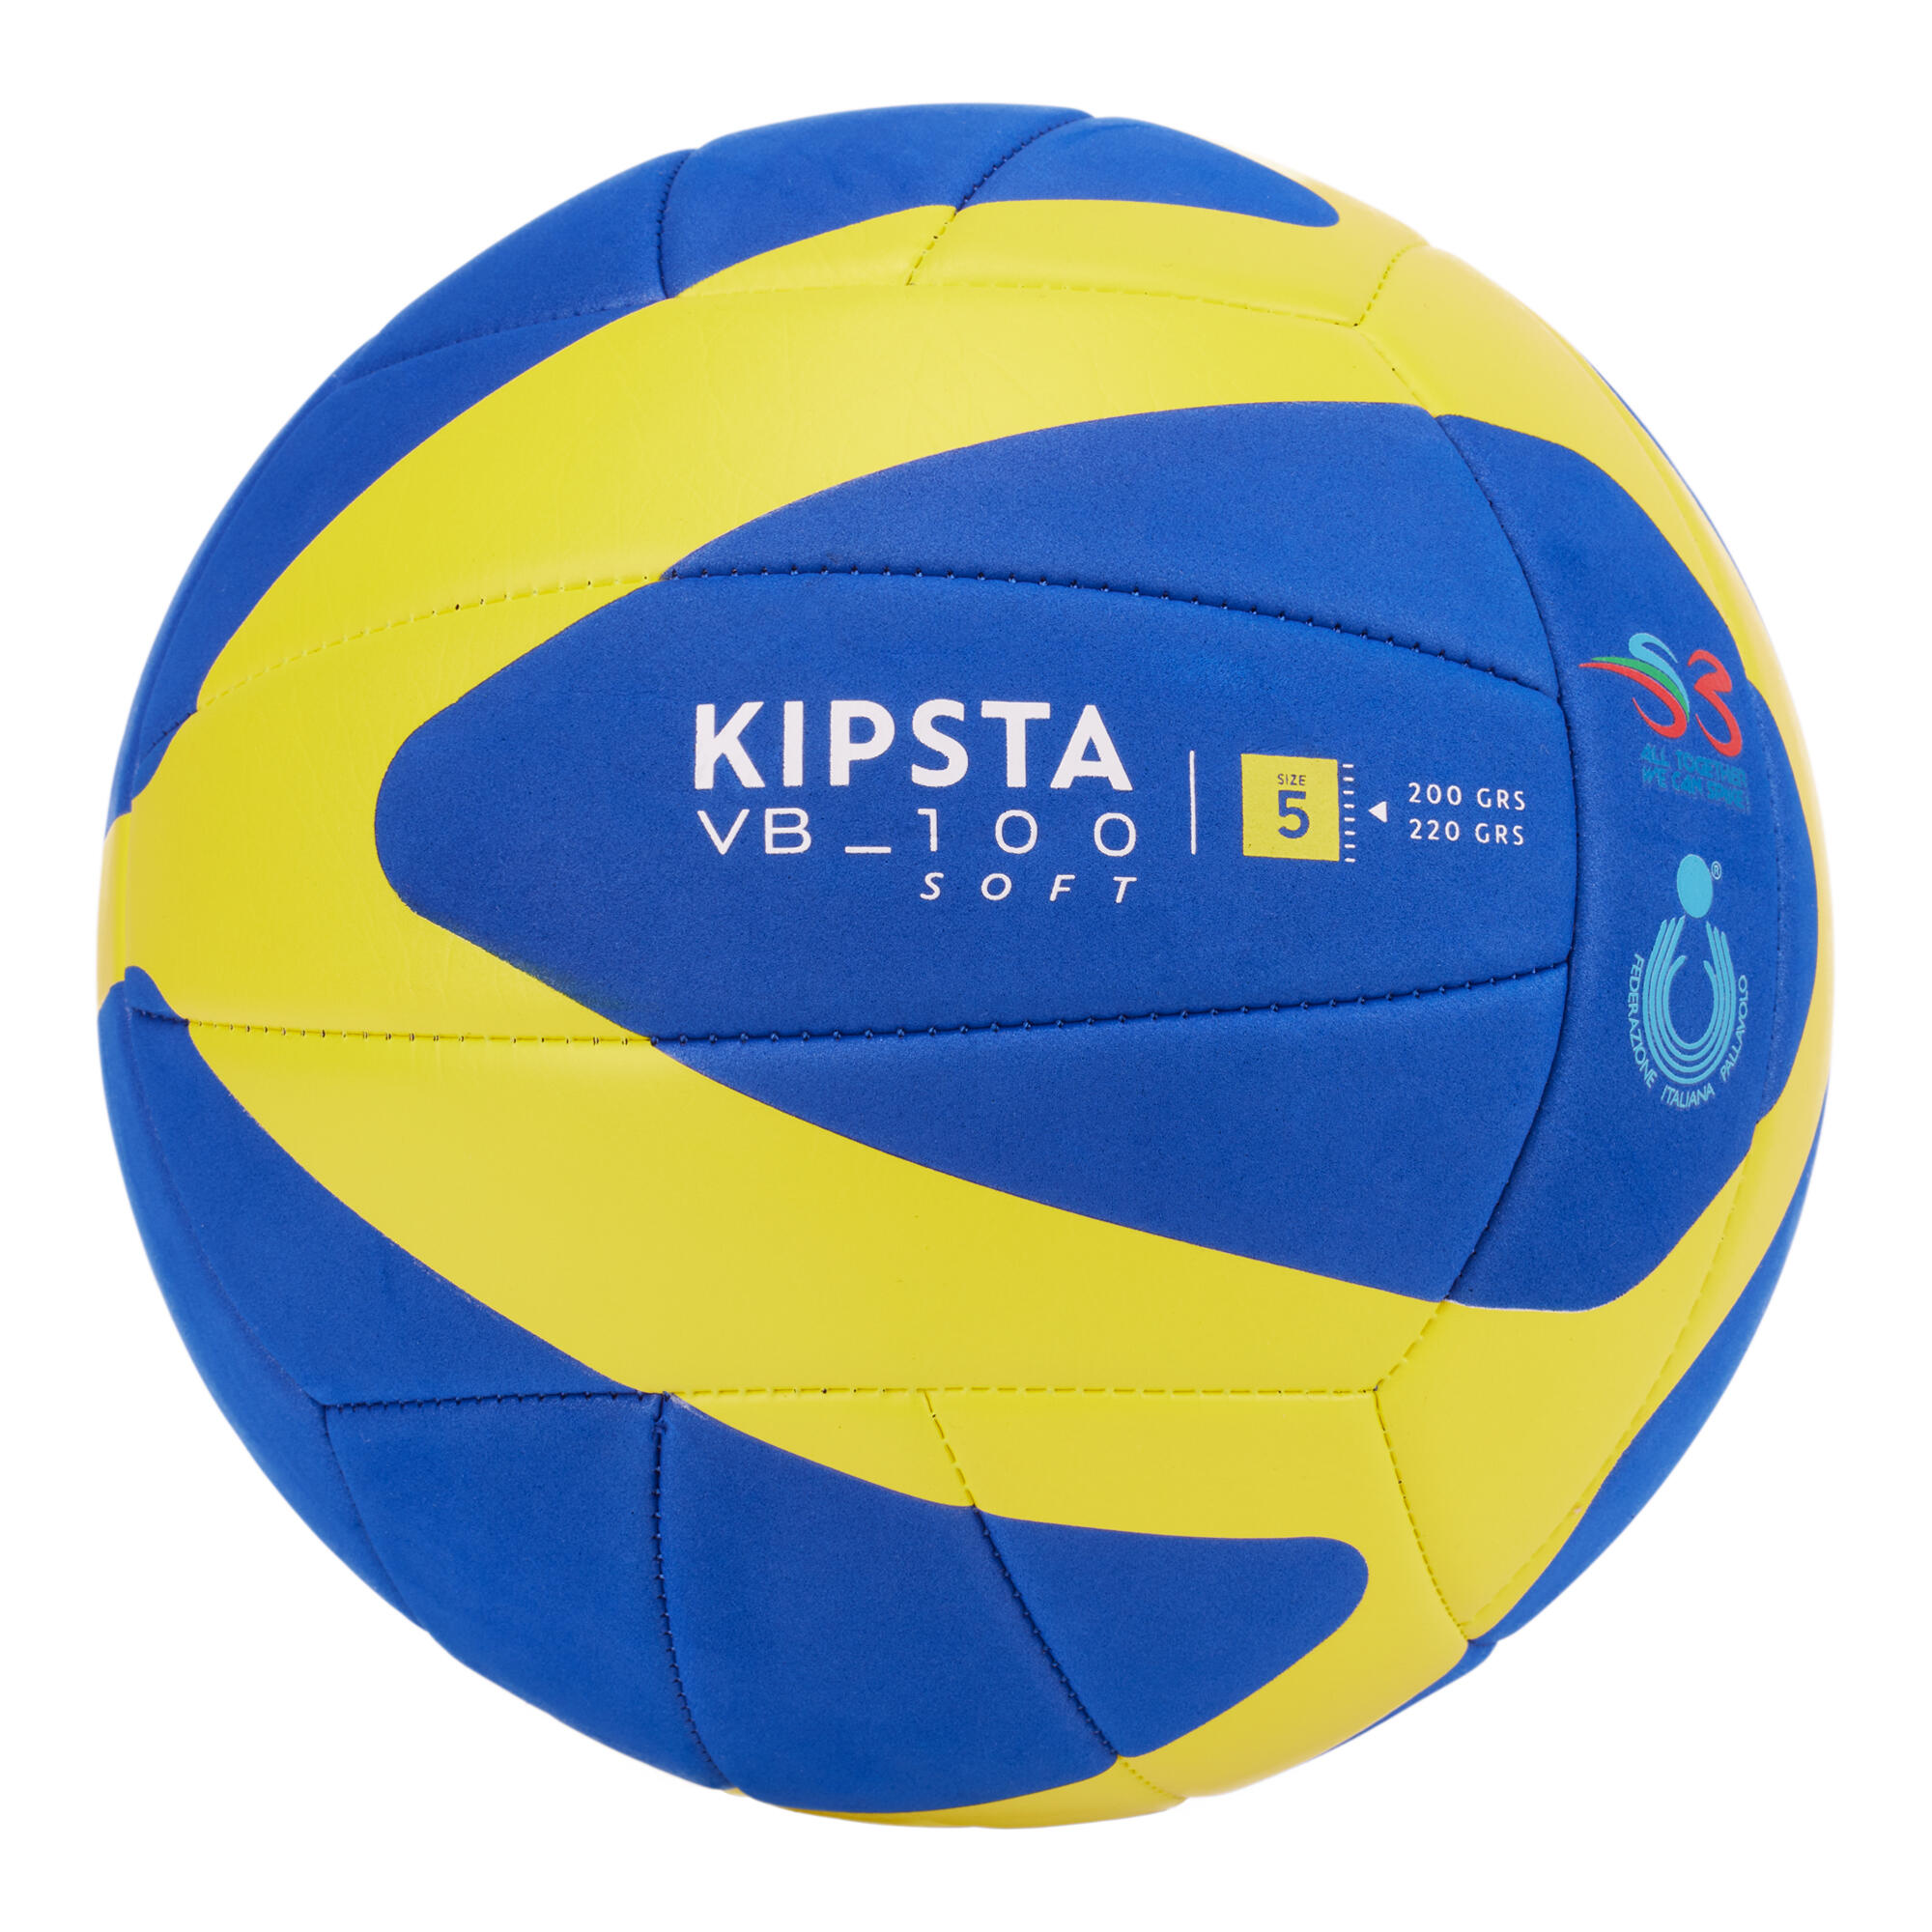 200-220g Volleyball V100 Soft -Blue/Yellow- Italian Volleyball Federation FIPAV 1/3